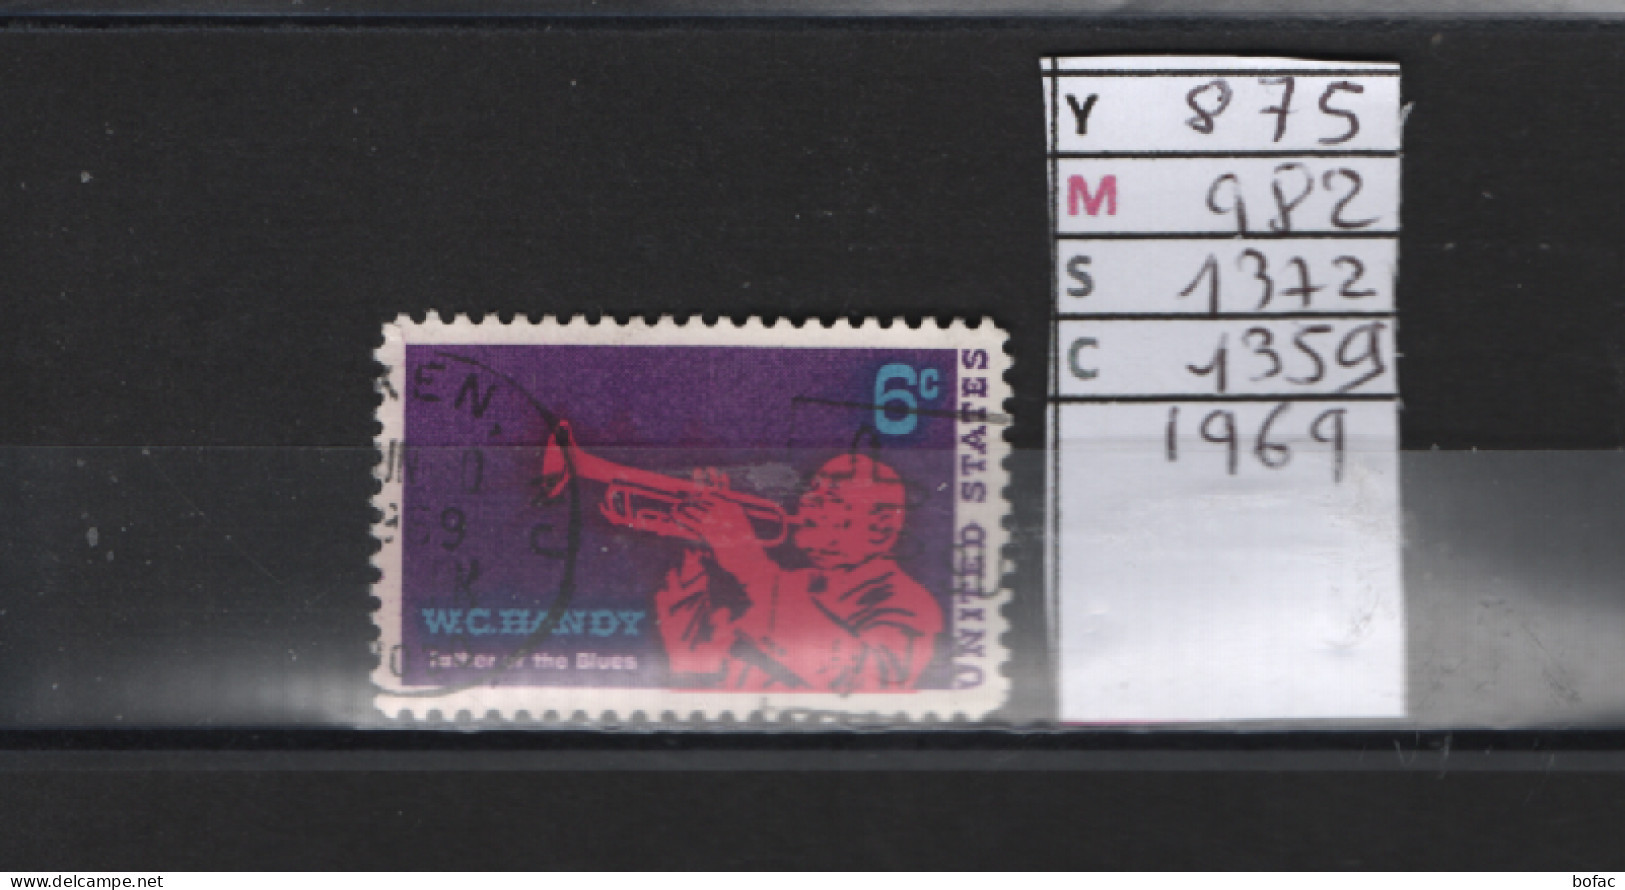 PRIX FIXE Obl 875 YT 982  MIC 1372 SCO 1359 GIB W. C. Handy 1969  Etats Unis  58A/13 - Used Stamps